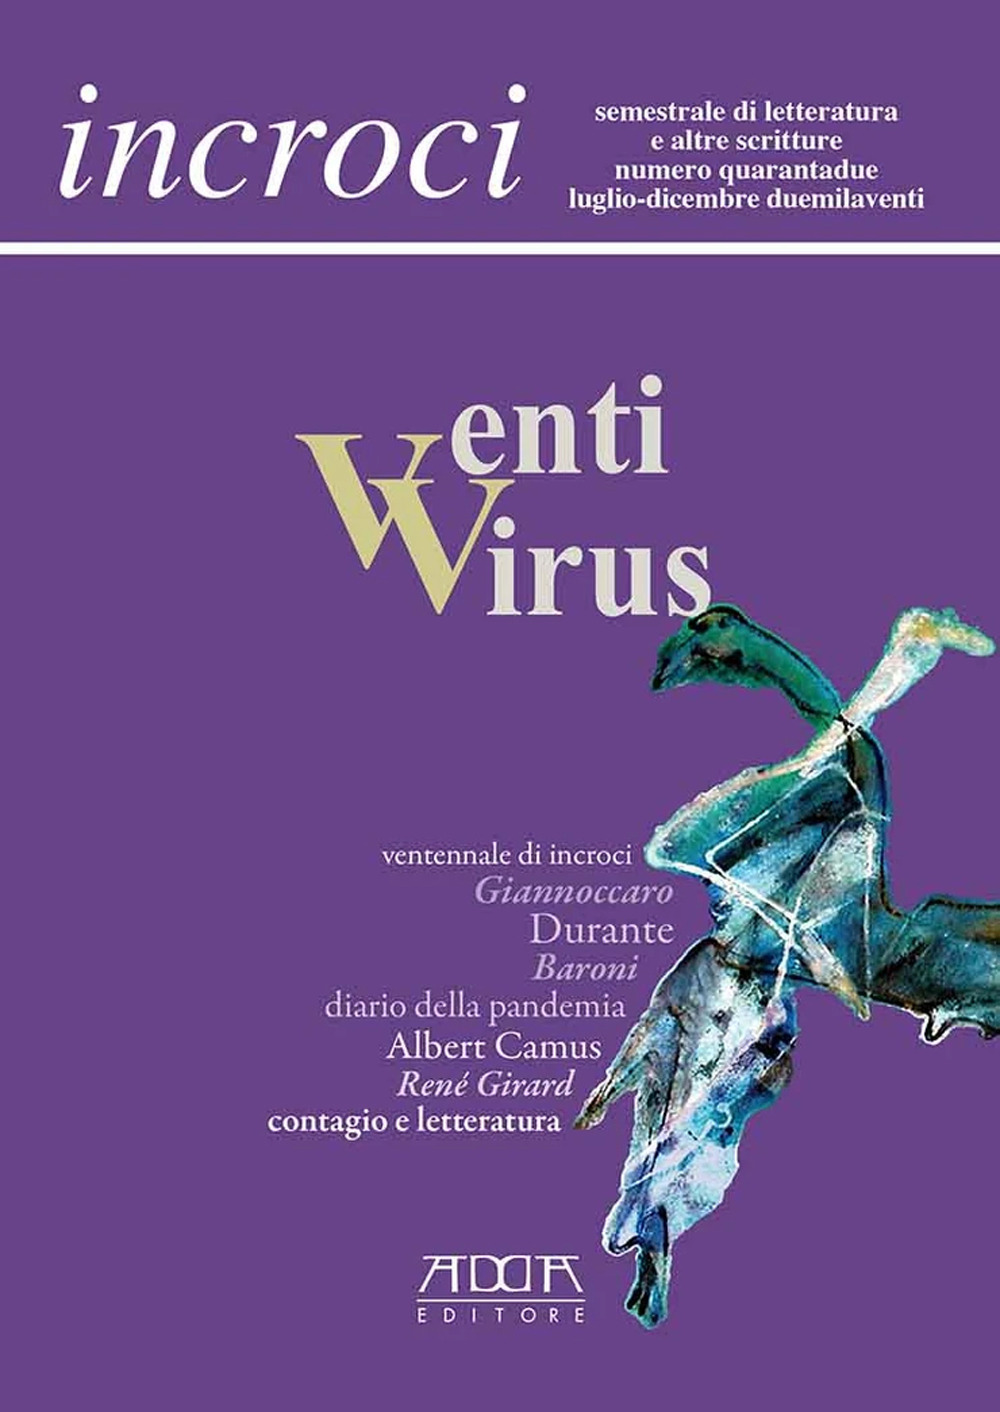 Incroci (2020). Vol. 42: Venti virus